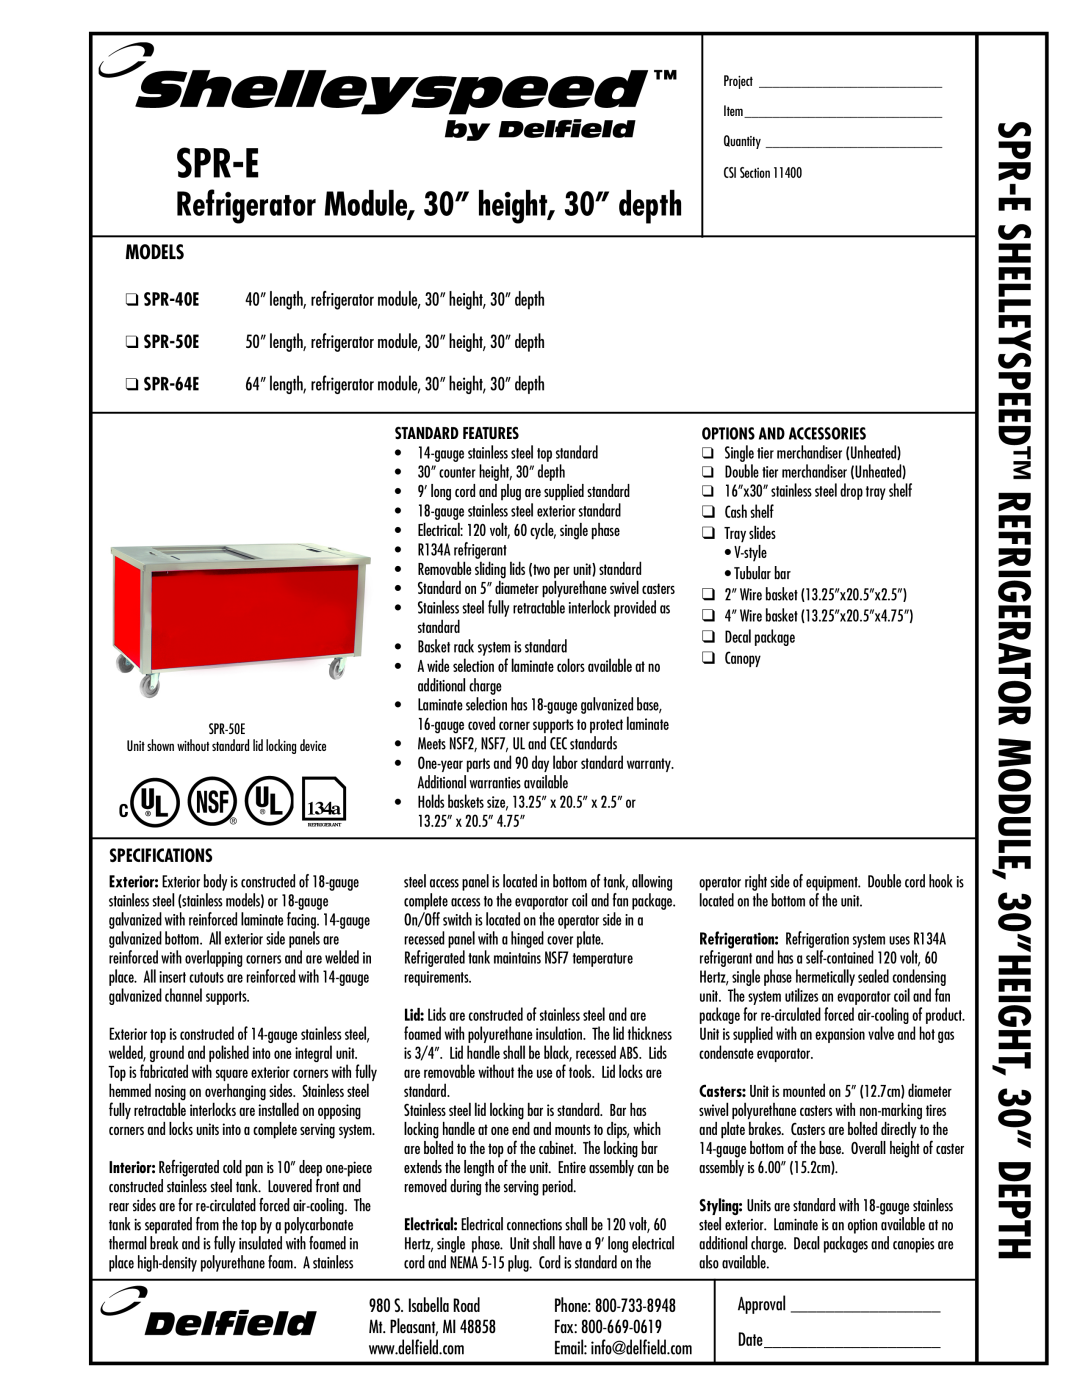 Delfield SPR-50E manual SPR-40E 40” length, refrigerator module, 30” height, 30” depth, Specifications, Approval, Date 